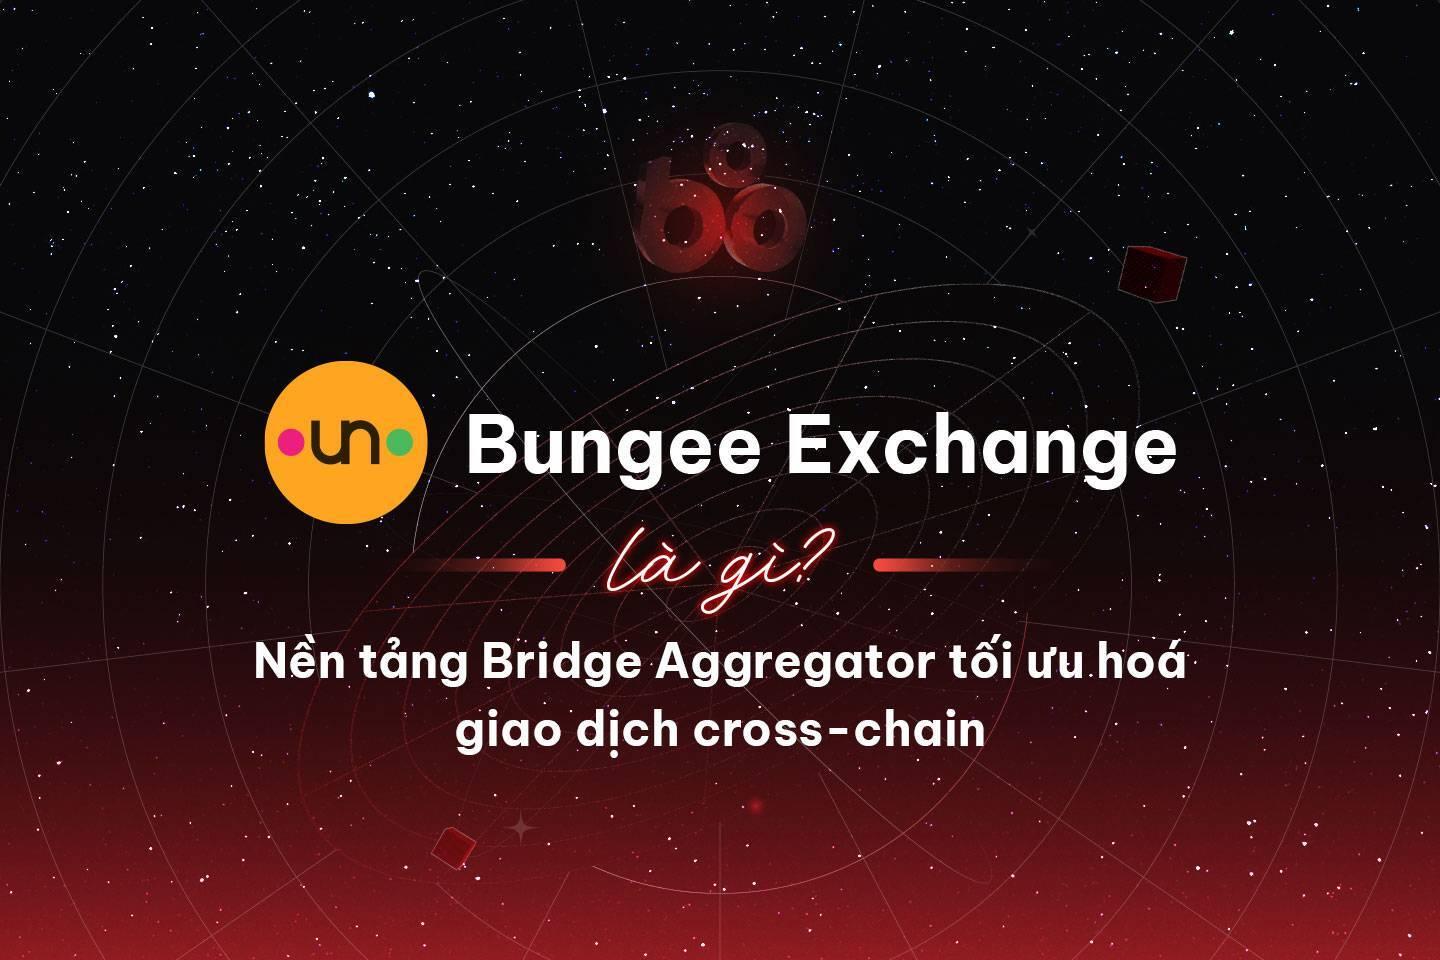 bungee-exchange-la-gi-nen-tang-bridge-aggregator-toi-uu-hoa-giao-dich-cross-chain